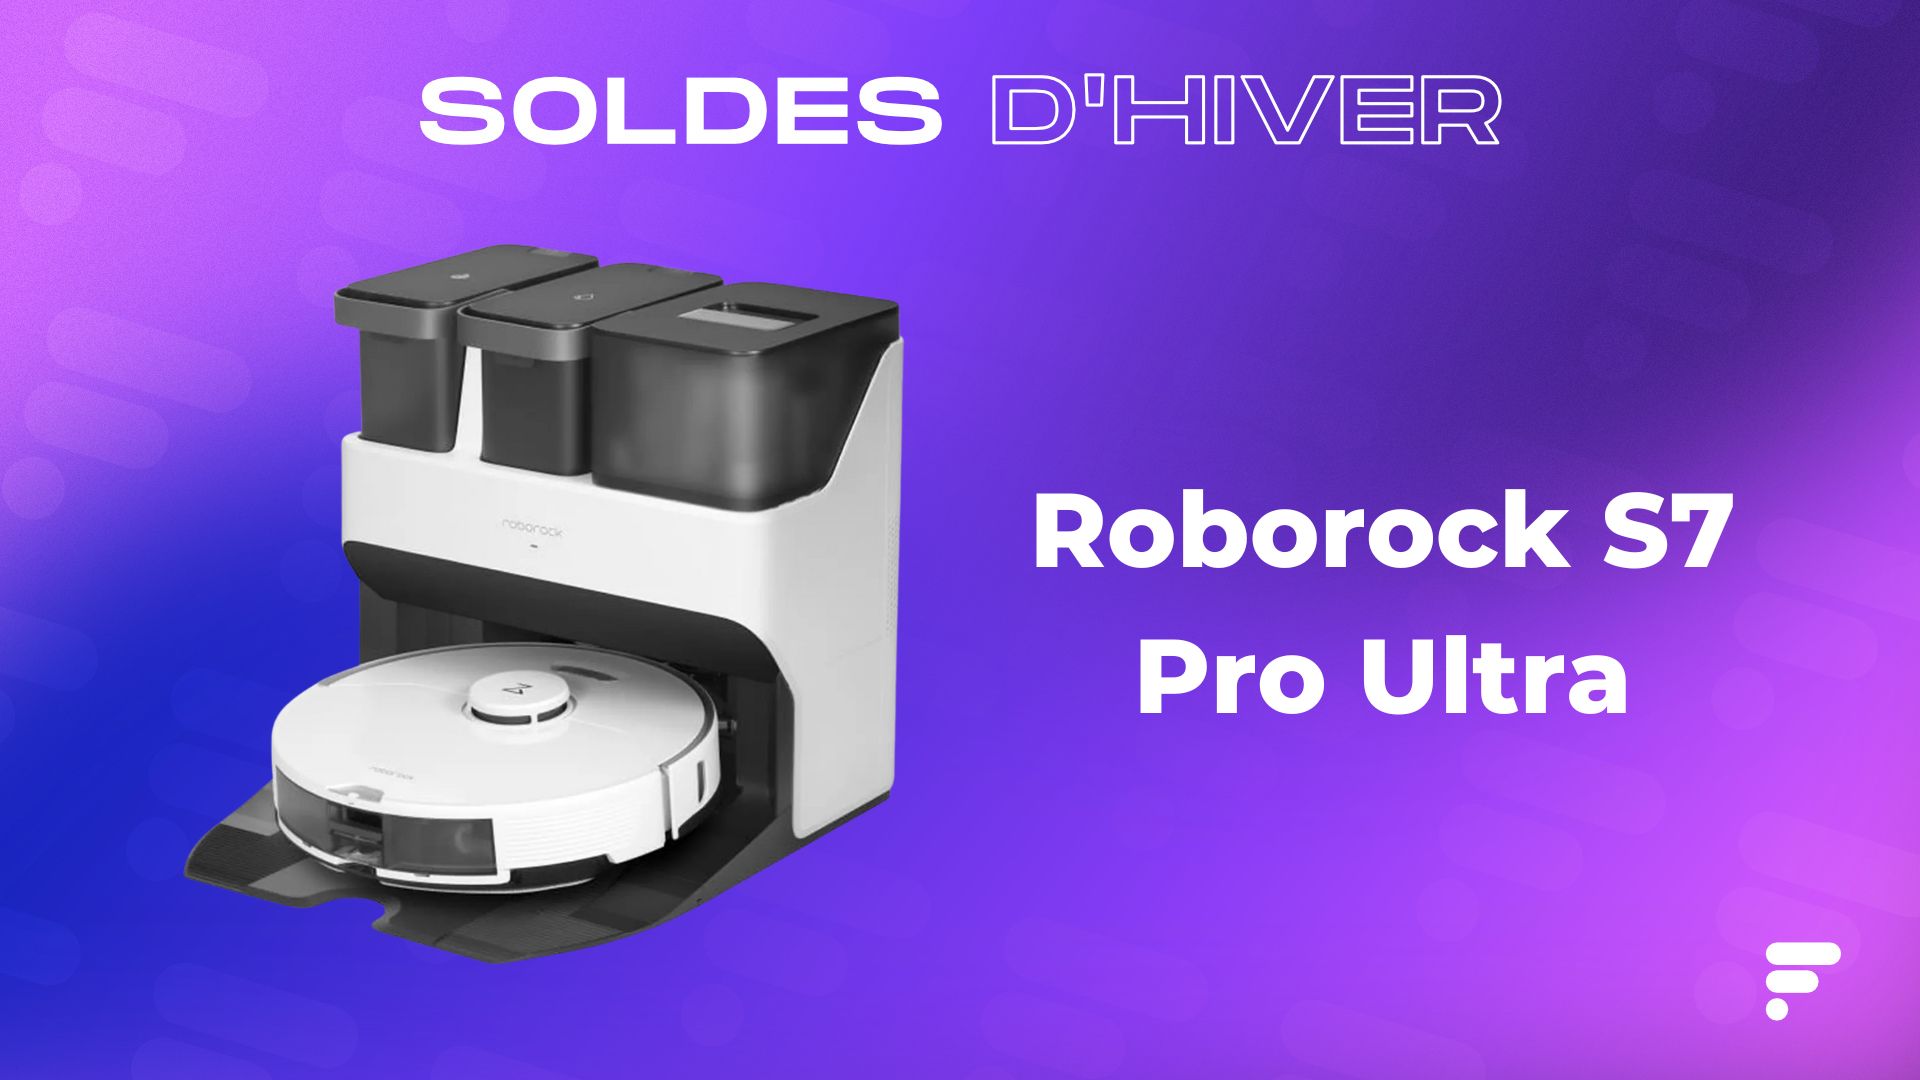 Роборок s7 ultra. Roborock s7 Pro Ultra. Roborock s7 Pro Ultra самоочистка. Робот-пылесос Roborock s8 Pro Ultra. Roborock s7 Pro Ultra сьем АКБ.